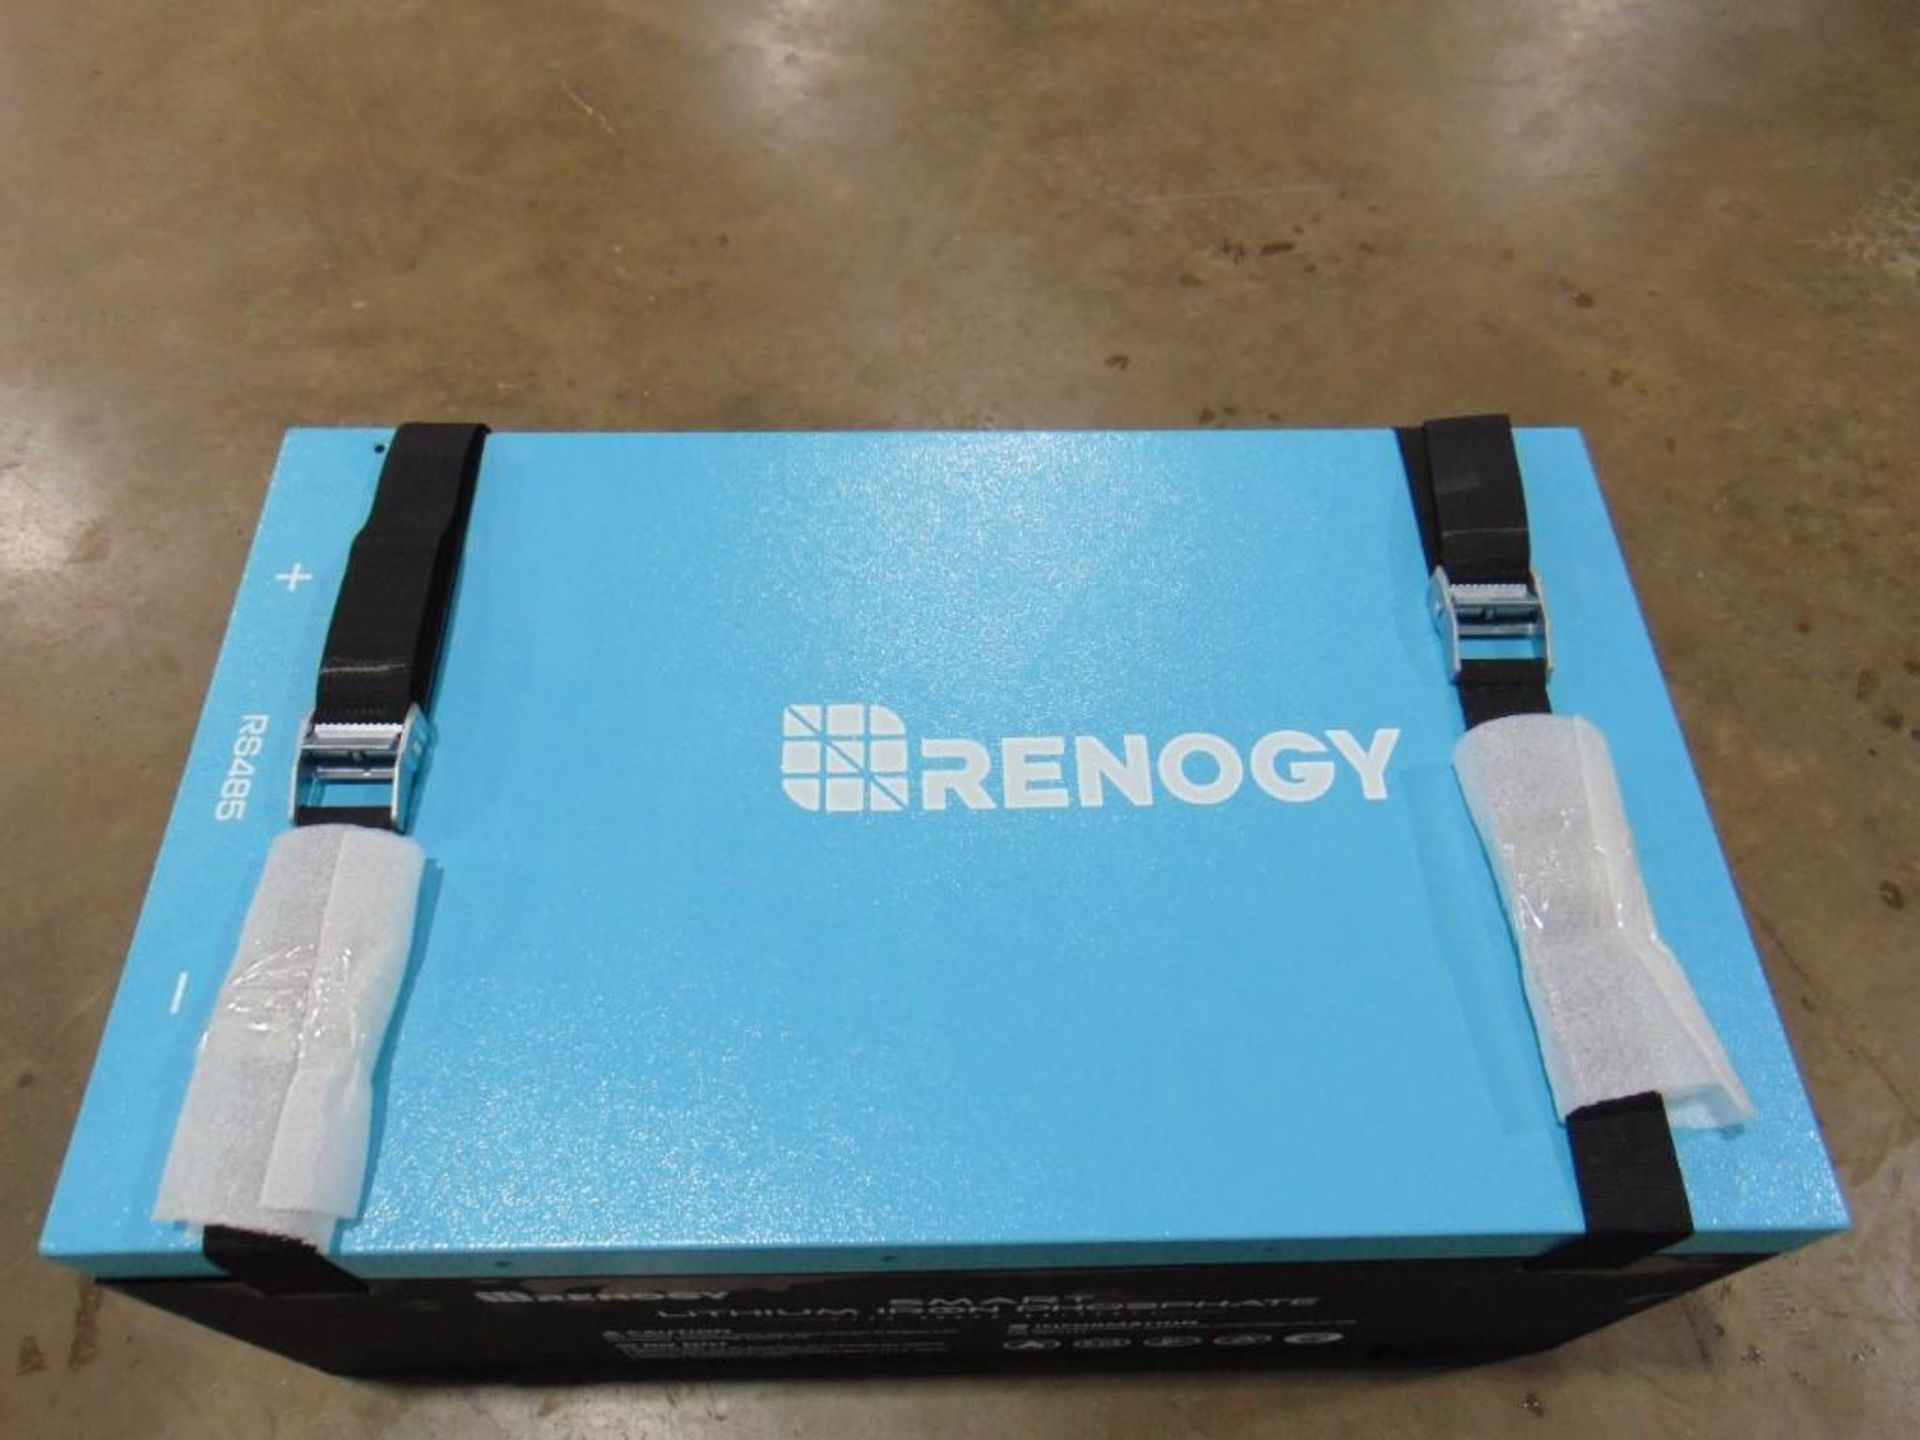 New Renogy RBB400-G1-US Battery Boxes - Image 2 of 11